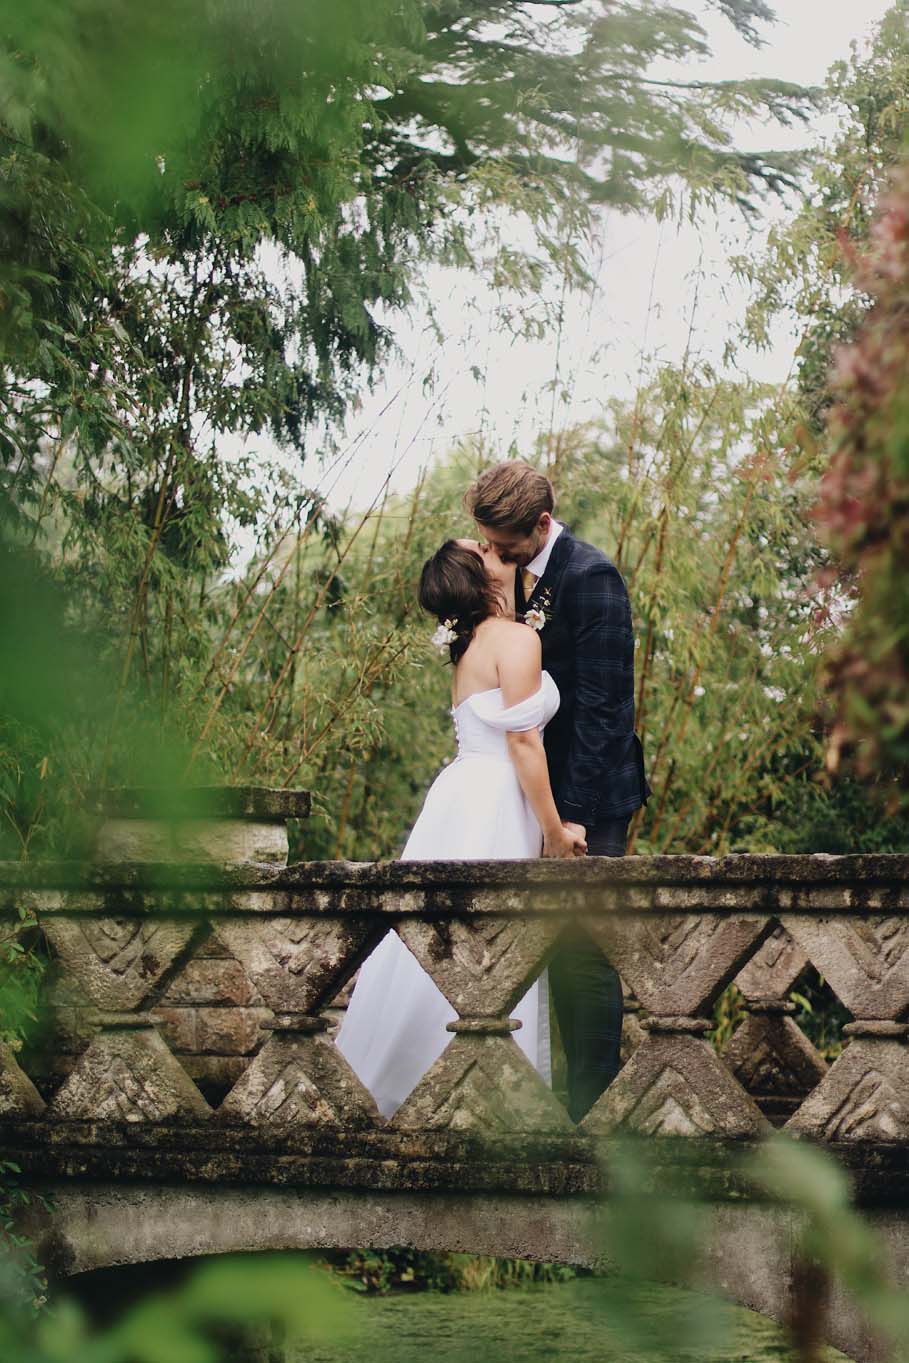 Wedding couple pose on ornamental bridge, Botanical Gardens